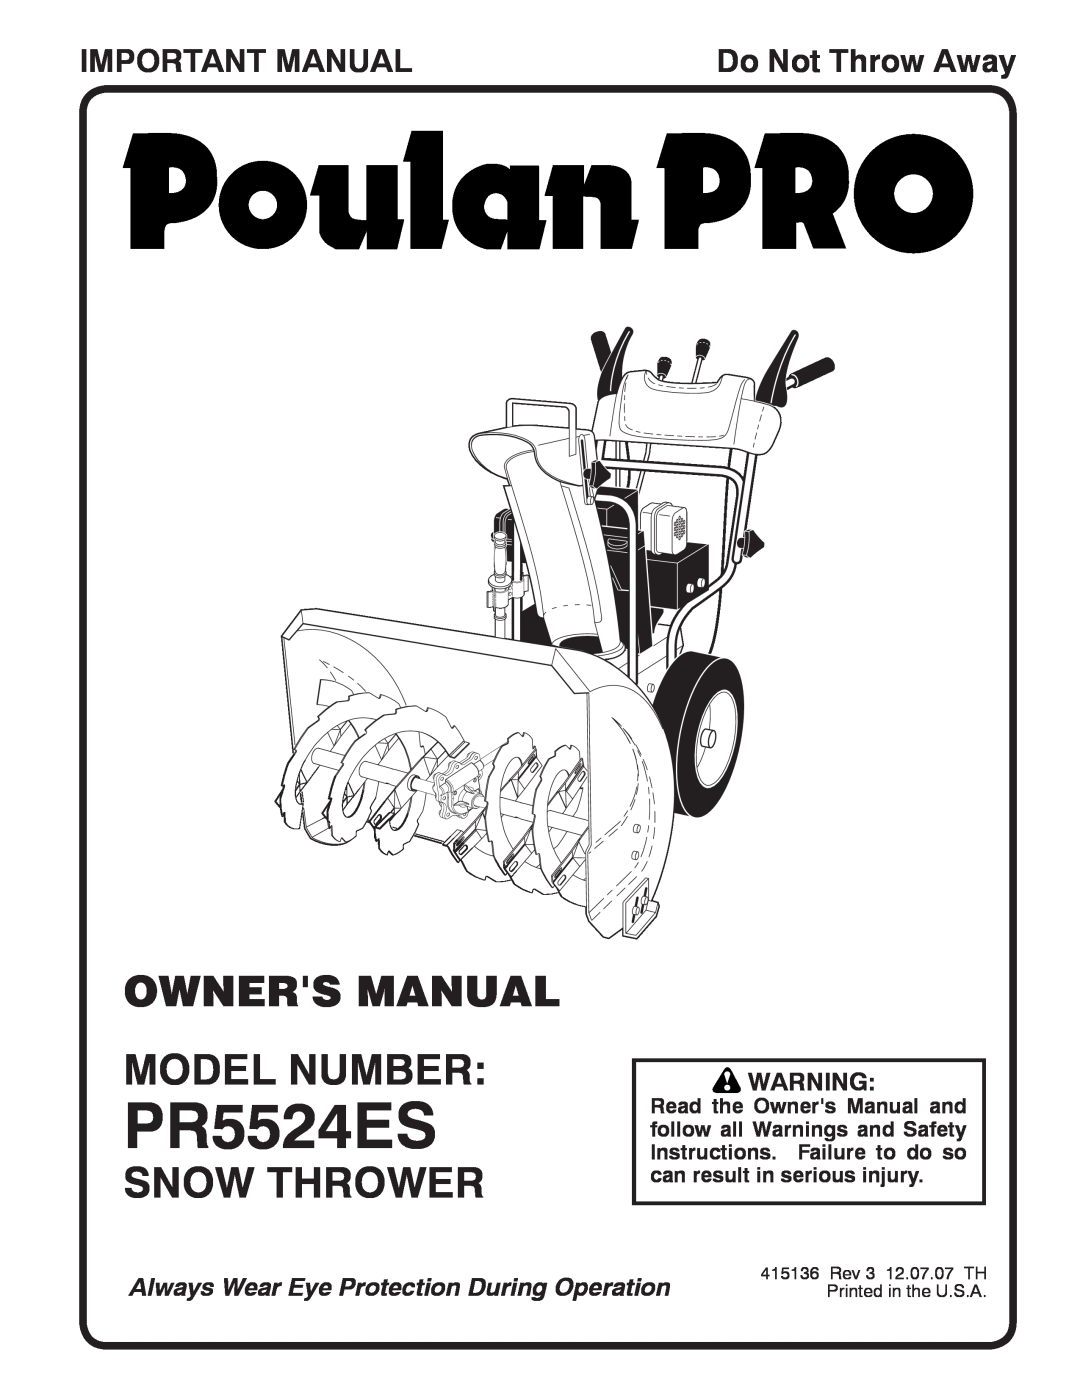 Poulan 415136 owner manual Snow Thrower, Important Manual, PR5524ES, Do Not Throw Away 